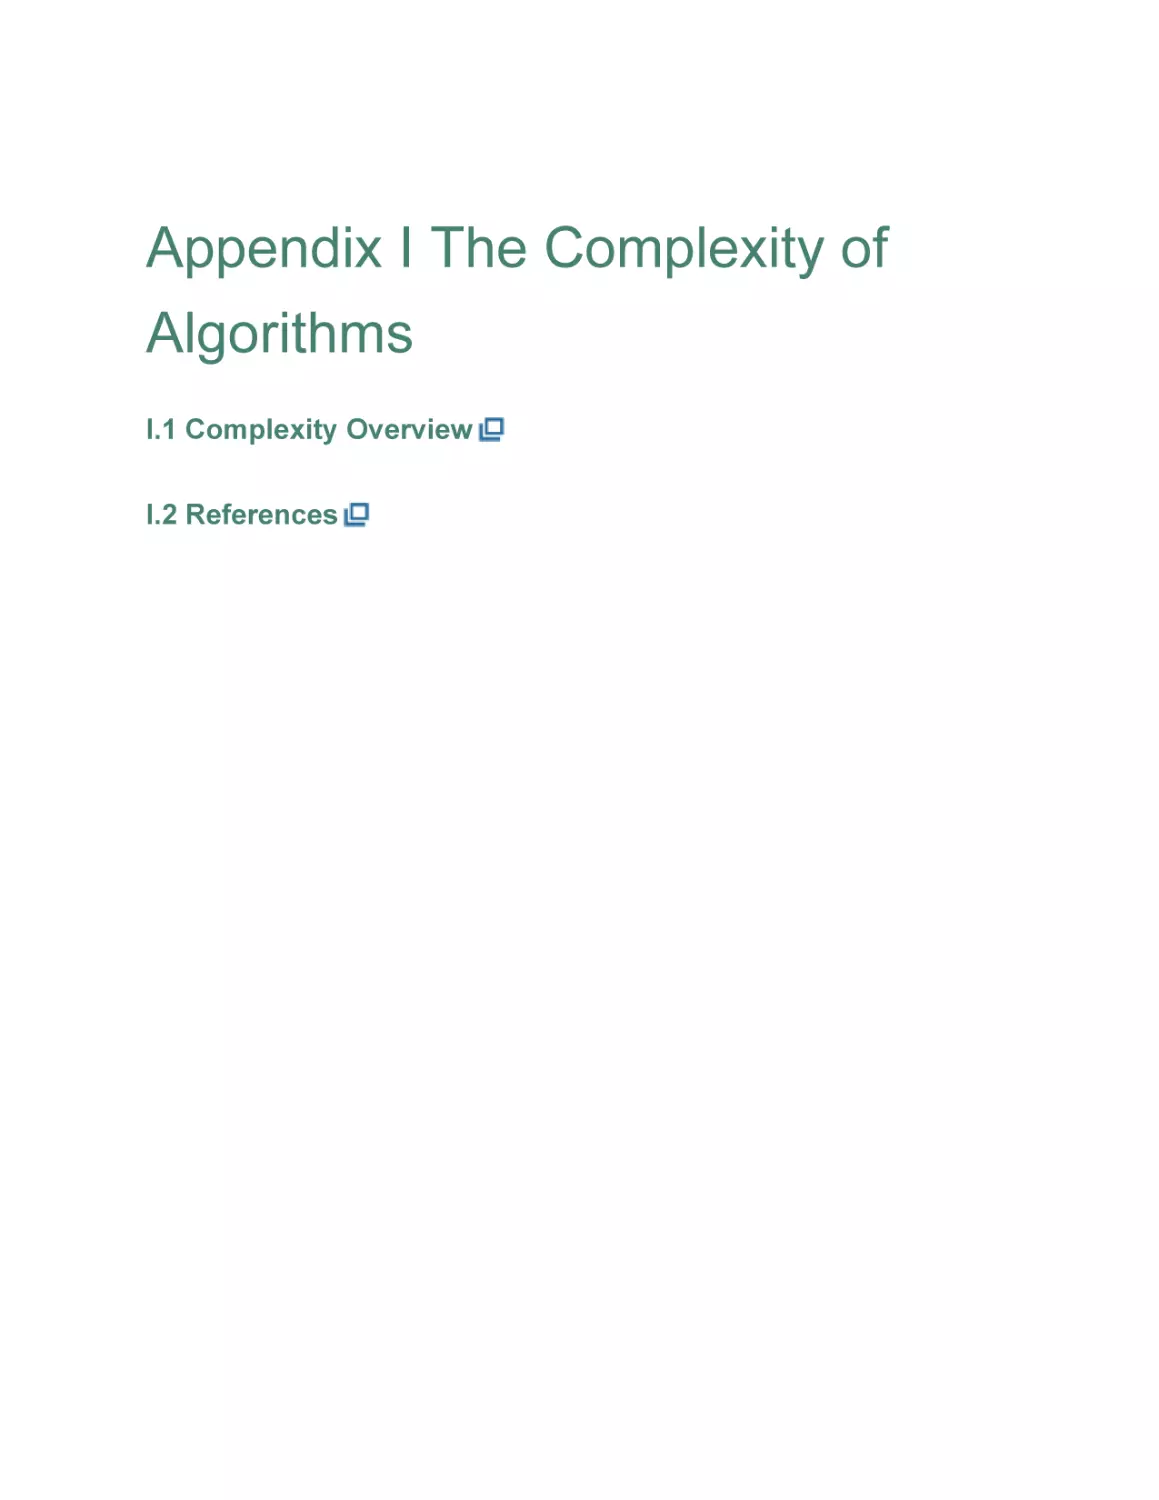 Appendix I The Complexity of Algorithms